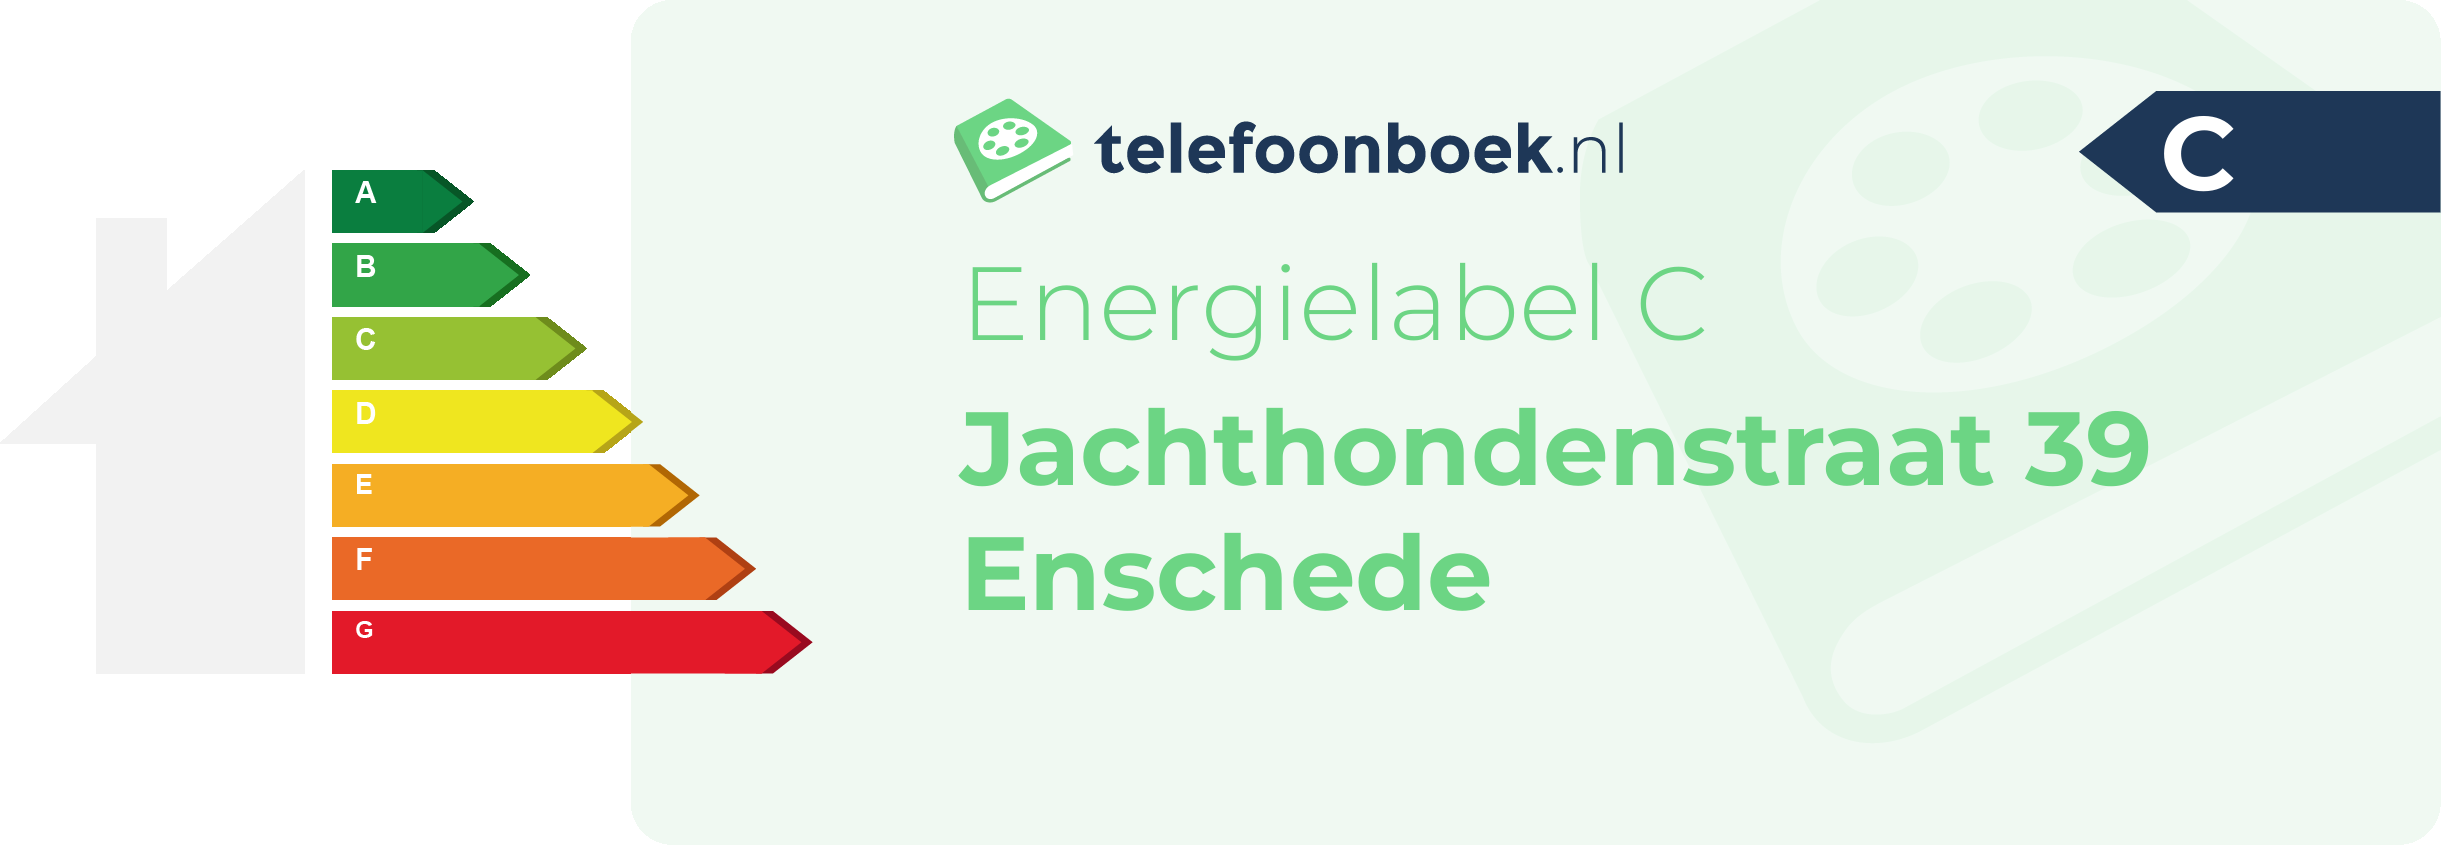 Energielabel Jachthondenstraat 39 Enschede